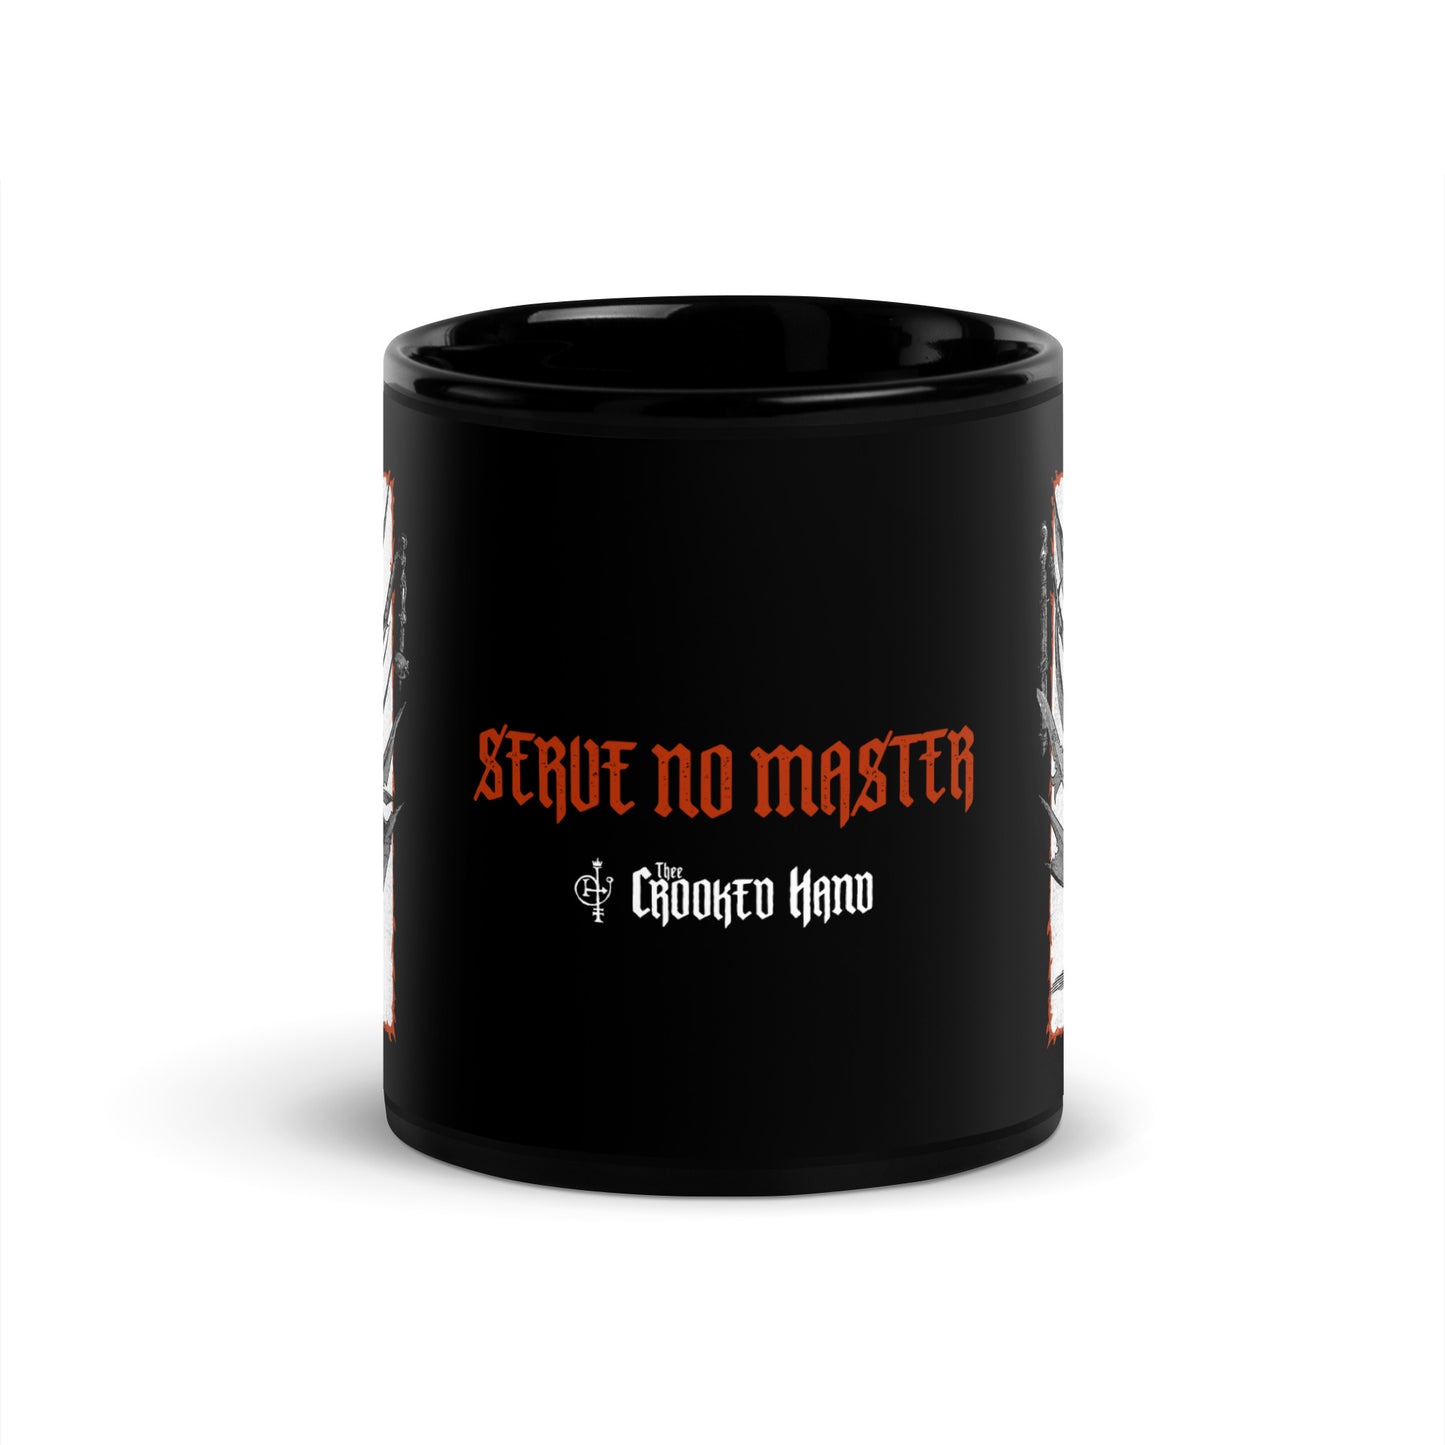 SERVE NO MASTER black glossy mug